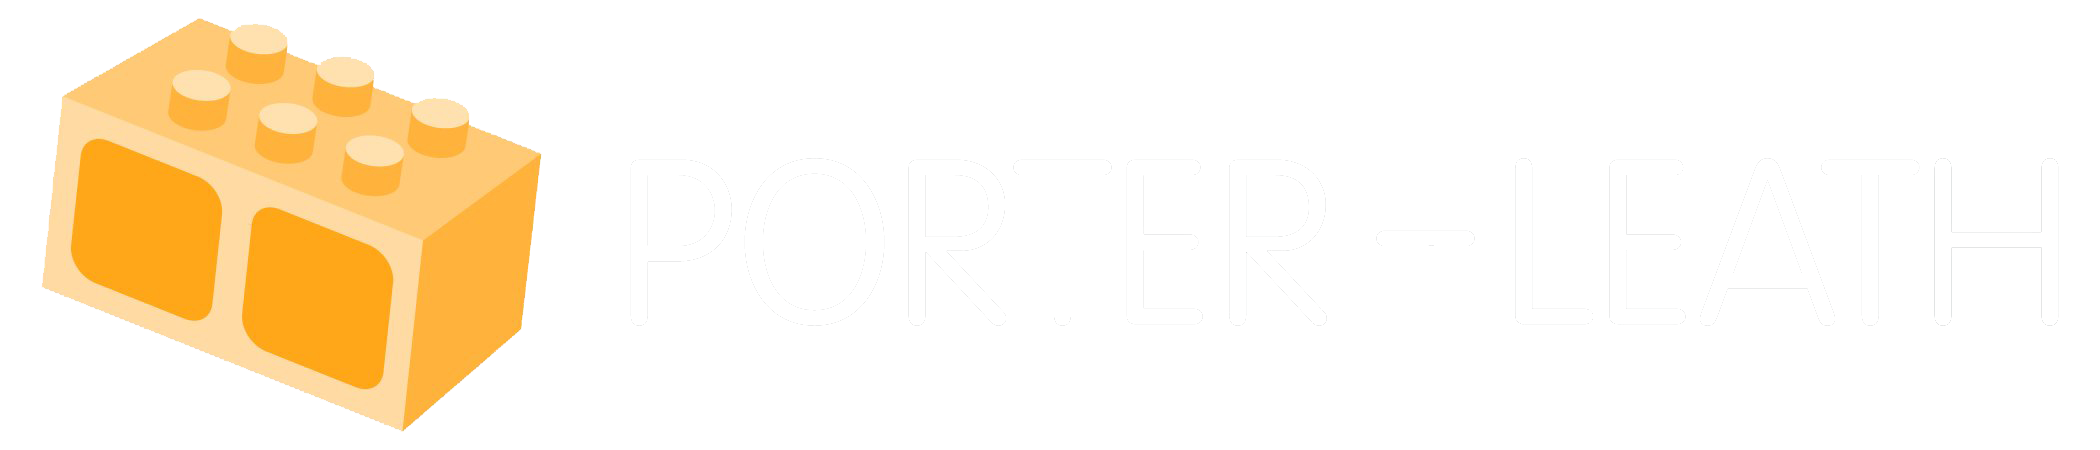 Porter-Leath